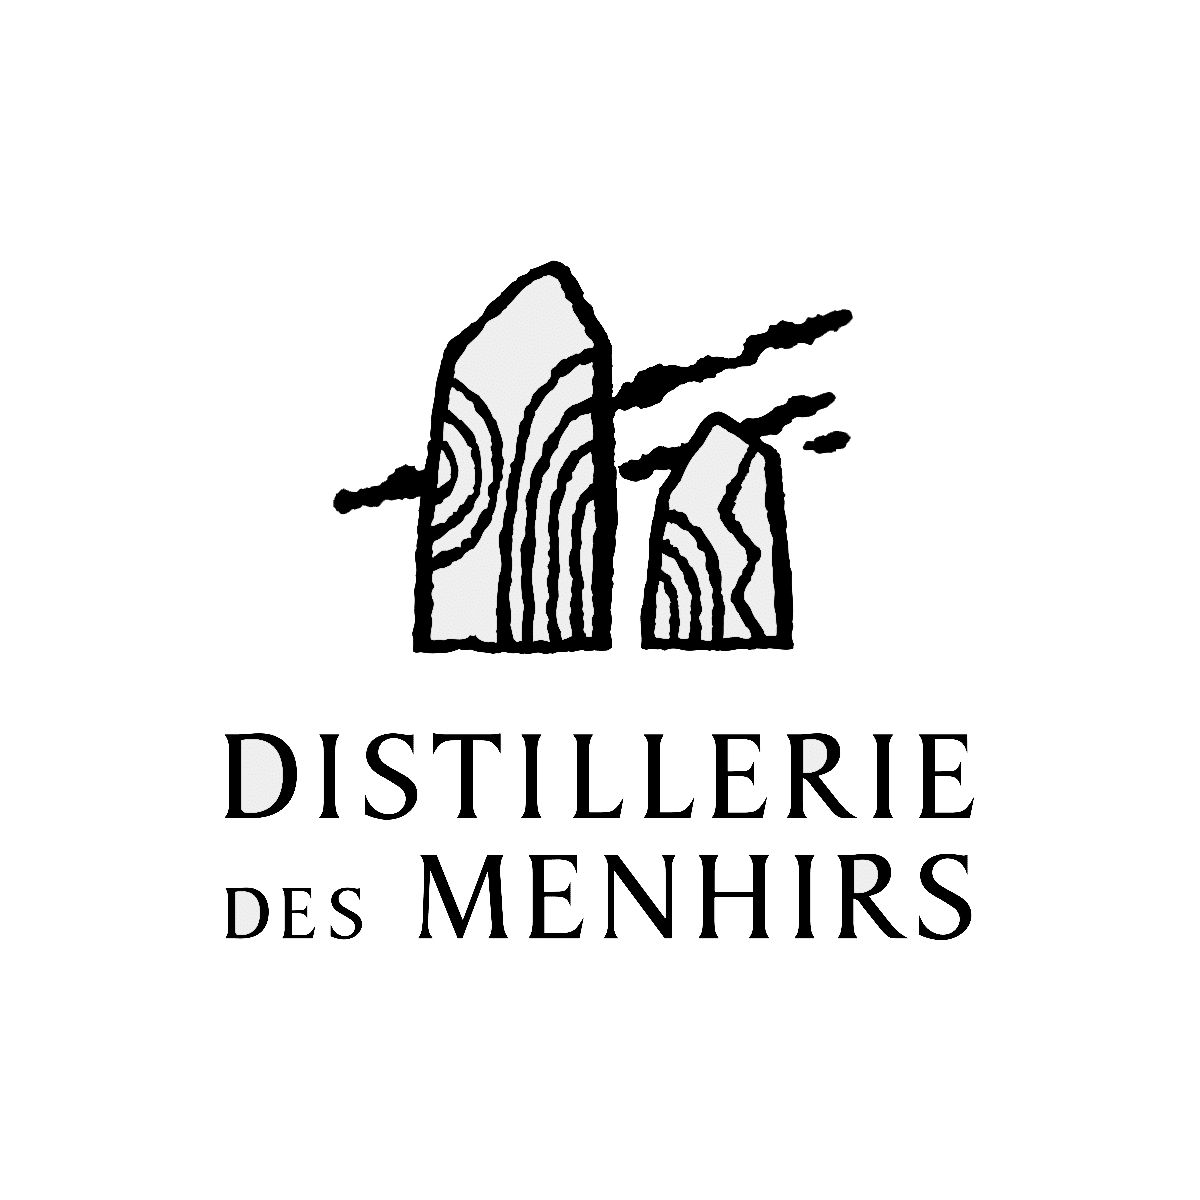 Diatillerie des Menhirs